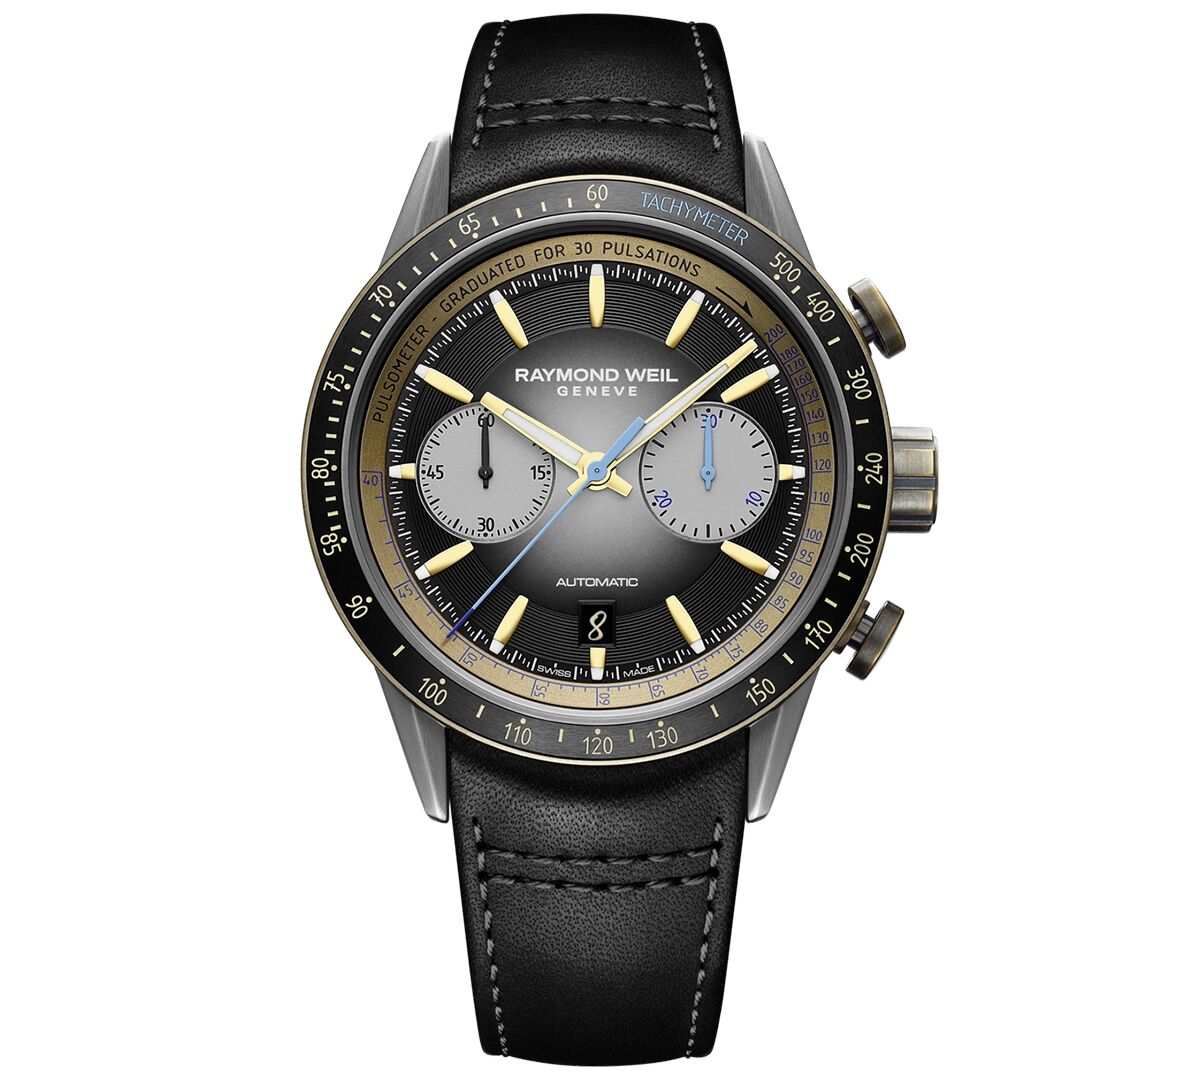 Raymond Weil Men's Swiss Automatic Chronograph Freelancer Black Leather Strap Watch 43.5mm - Black